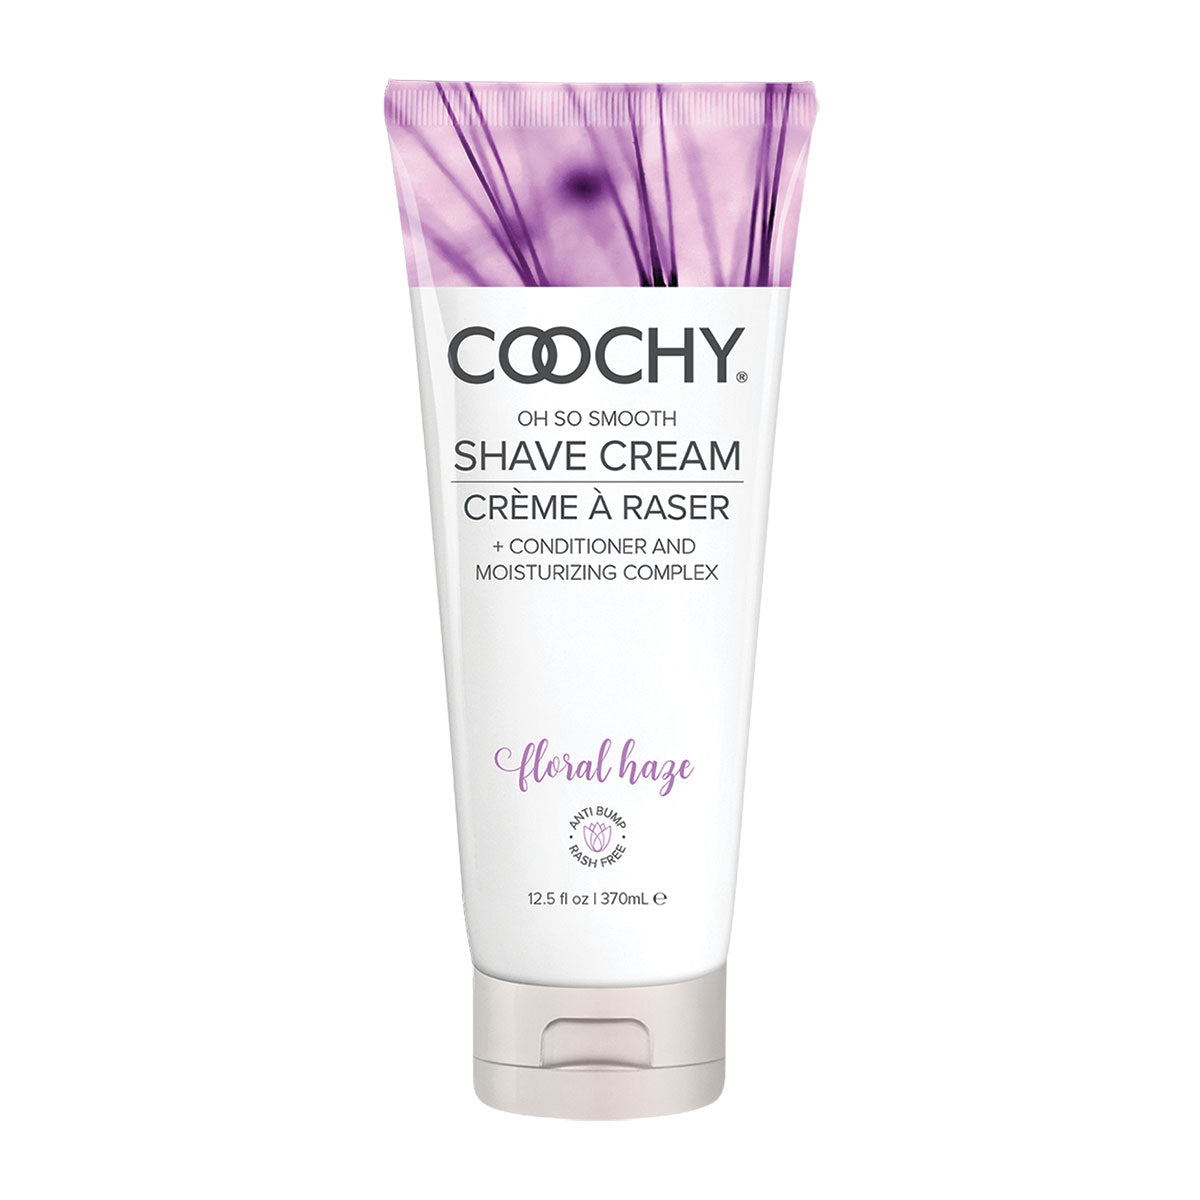 Coochy Shave Cream 12.5oz - Floral Haze